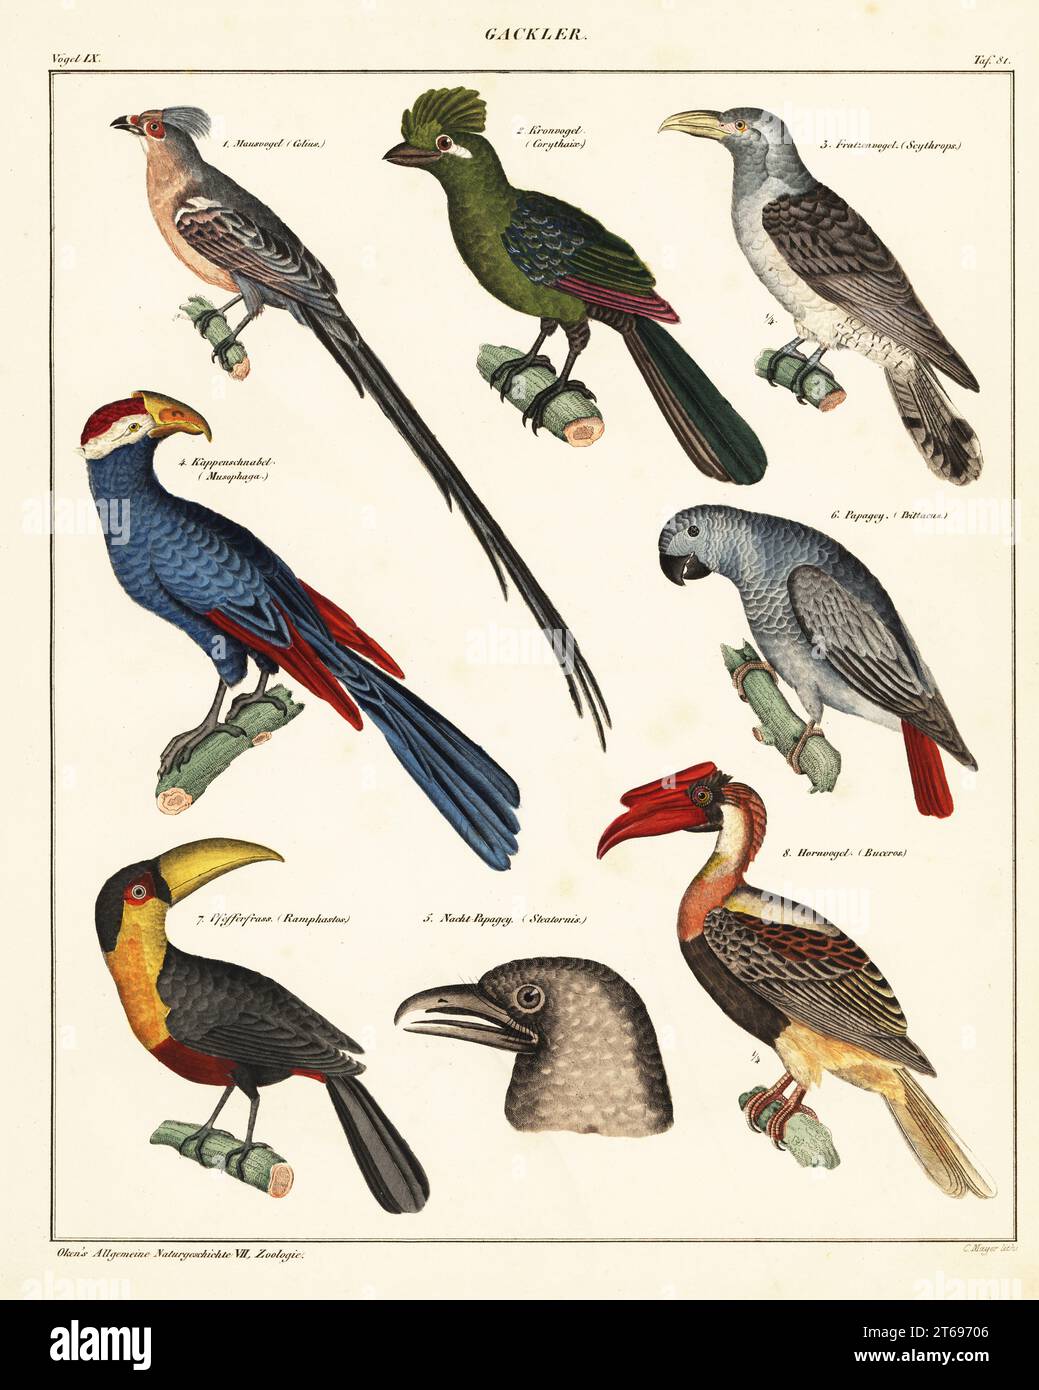 Varieties of birds. Gackler. 1 Mousebird, Colius colius, Mausvogel, 2 Knysna turaco, Tauraco corythaix, Kronvogel, 3 channel-billed cuckoo, Scythrops novaehollandiae, Fratzenvogel, 4 Lady Ross's turaco, Tauraco rossae, Kappenschnabel, 5 oilbird, Steatornis caripensis, Nacht-Papagey, 6 endangered Congo grey parrot, Psittacus erithacus, Papagey, 7 green-billed toucan, Ramphastos dicolorus, Pfefferfrass, 8 rufous hornbill, Buceros hydrocorax, Hornvogel. Handcoloured lithograph by C. Mayer from Lorenz Oken's Universal Natural History, Allgemeine Naturgeschichte fur alle Stande, Stuttgart, 1841. Stock Photo